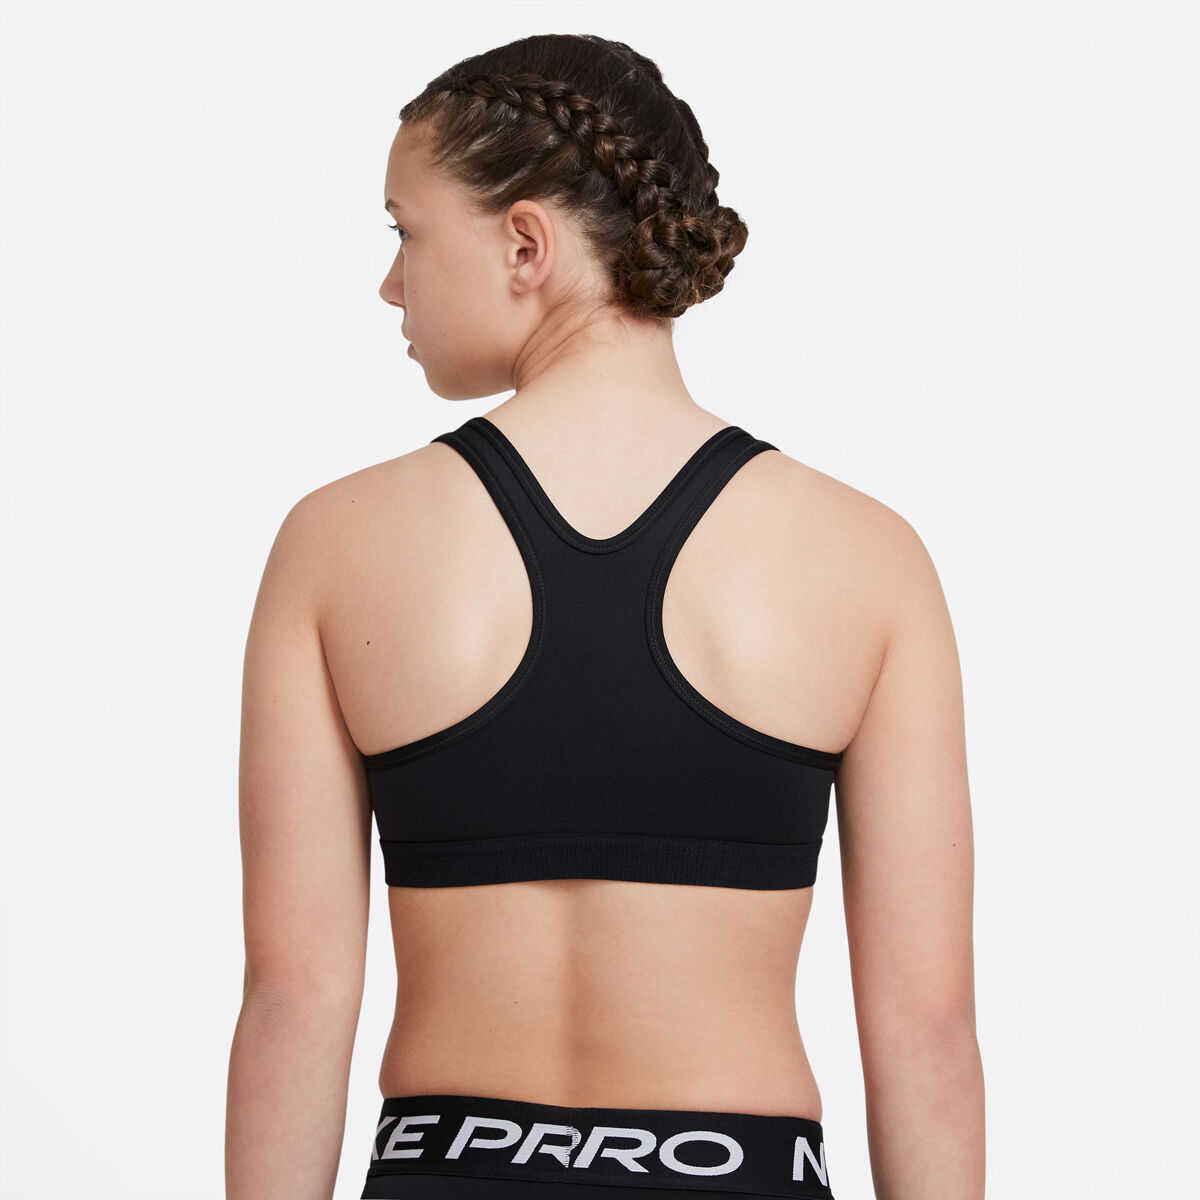 Nike Racerback Dry Fit Dark Charcoal/Pink Splatter Sports Bra Pre